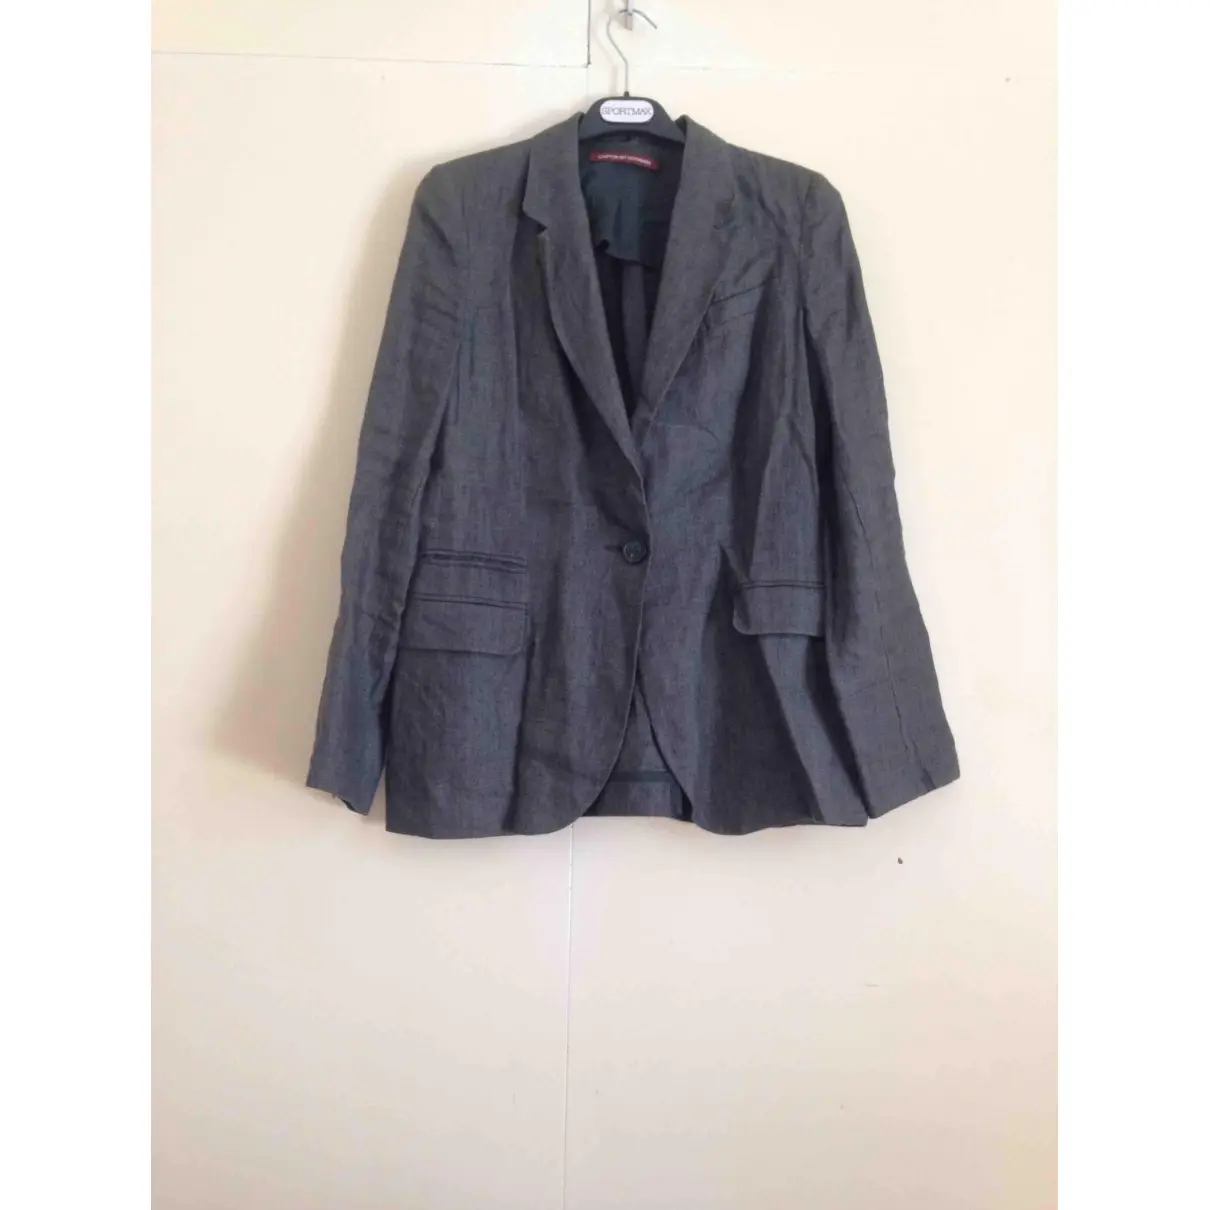 Buy Comptoir Des Cotonniers Linen jacket online